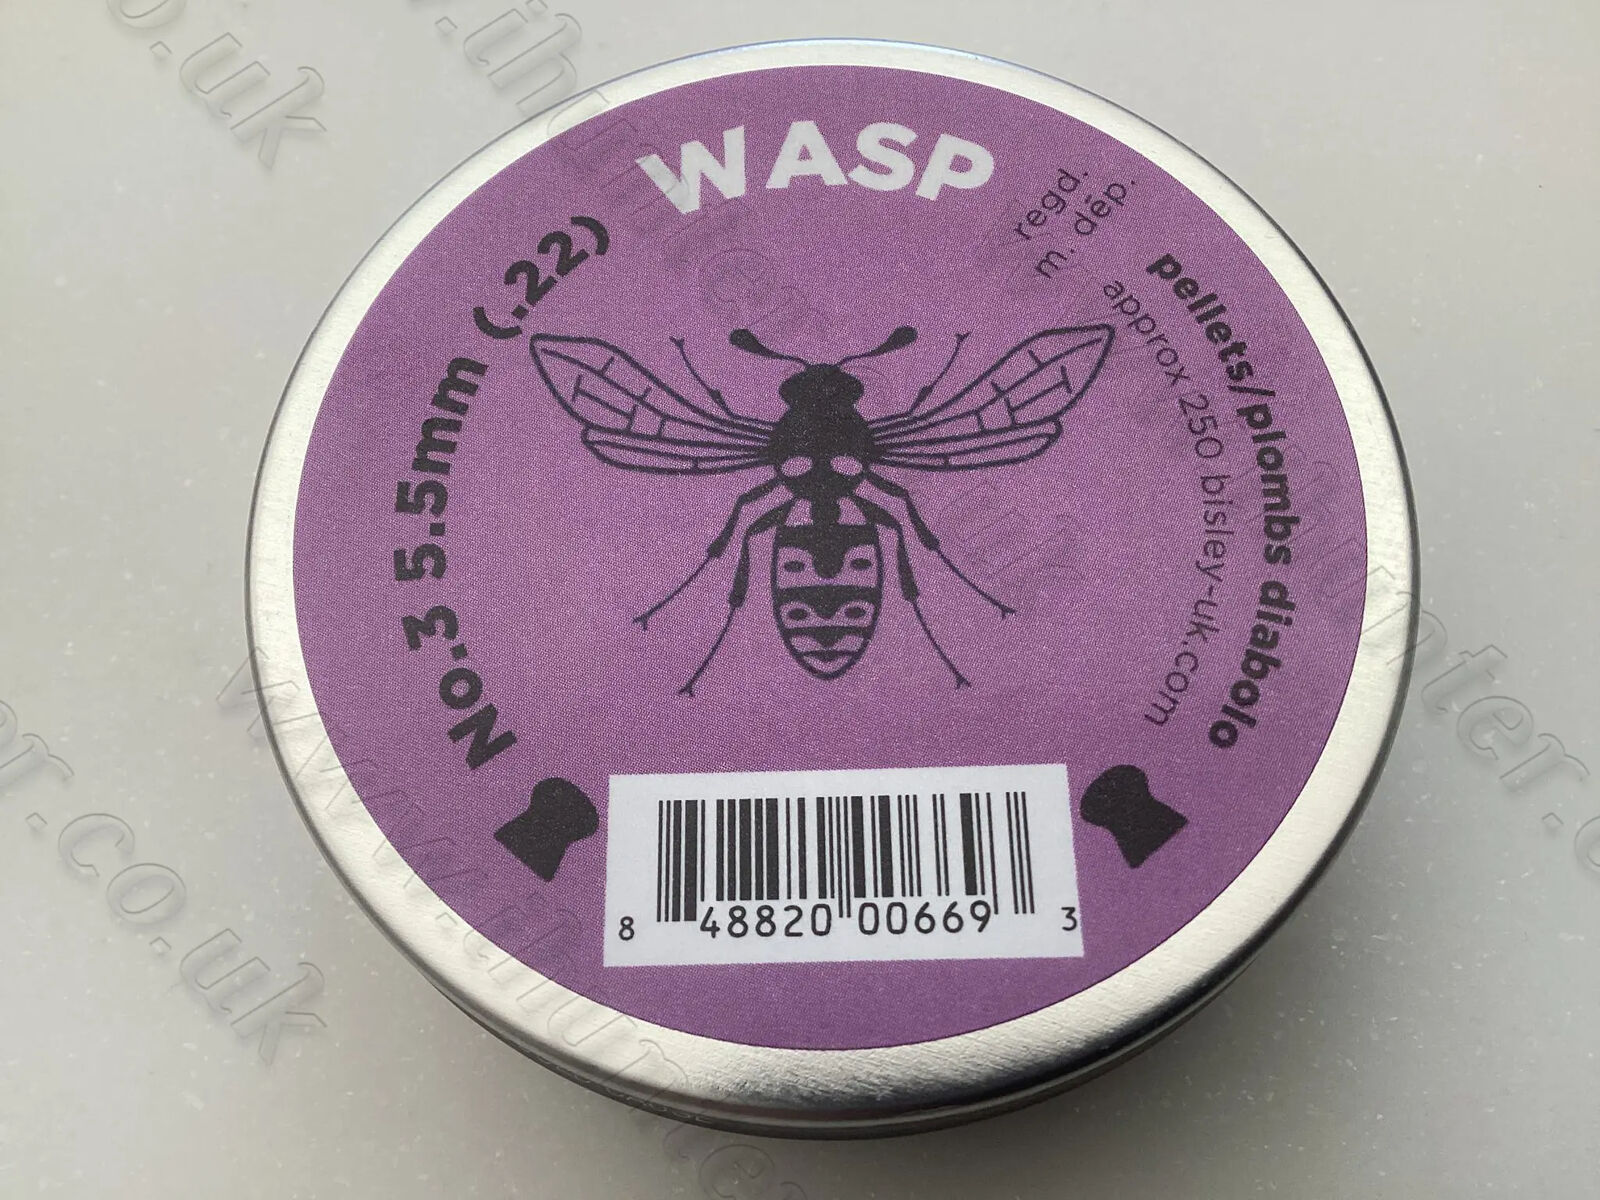 Wasps by Bisley .22/5.50mm air gun pellets  (250ct)   Free P&P  L637